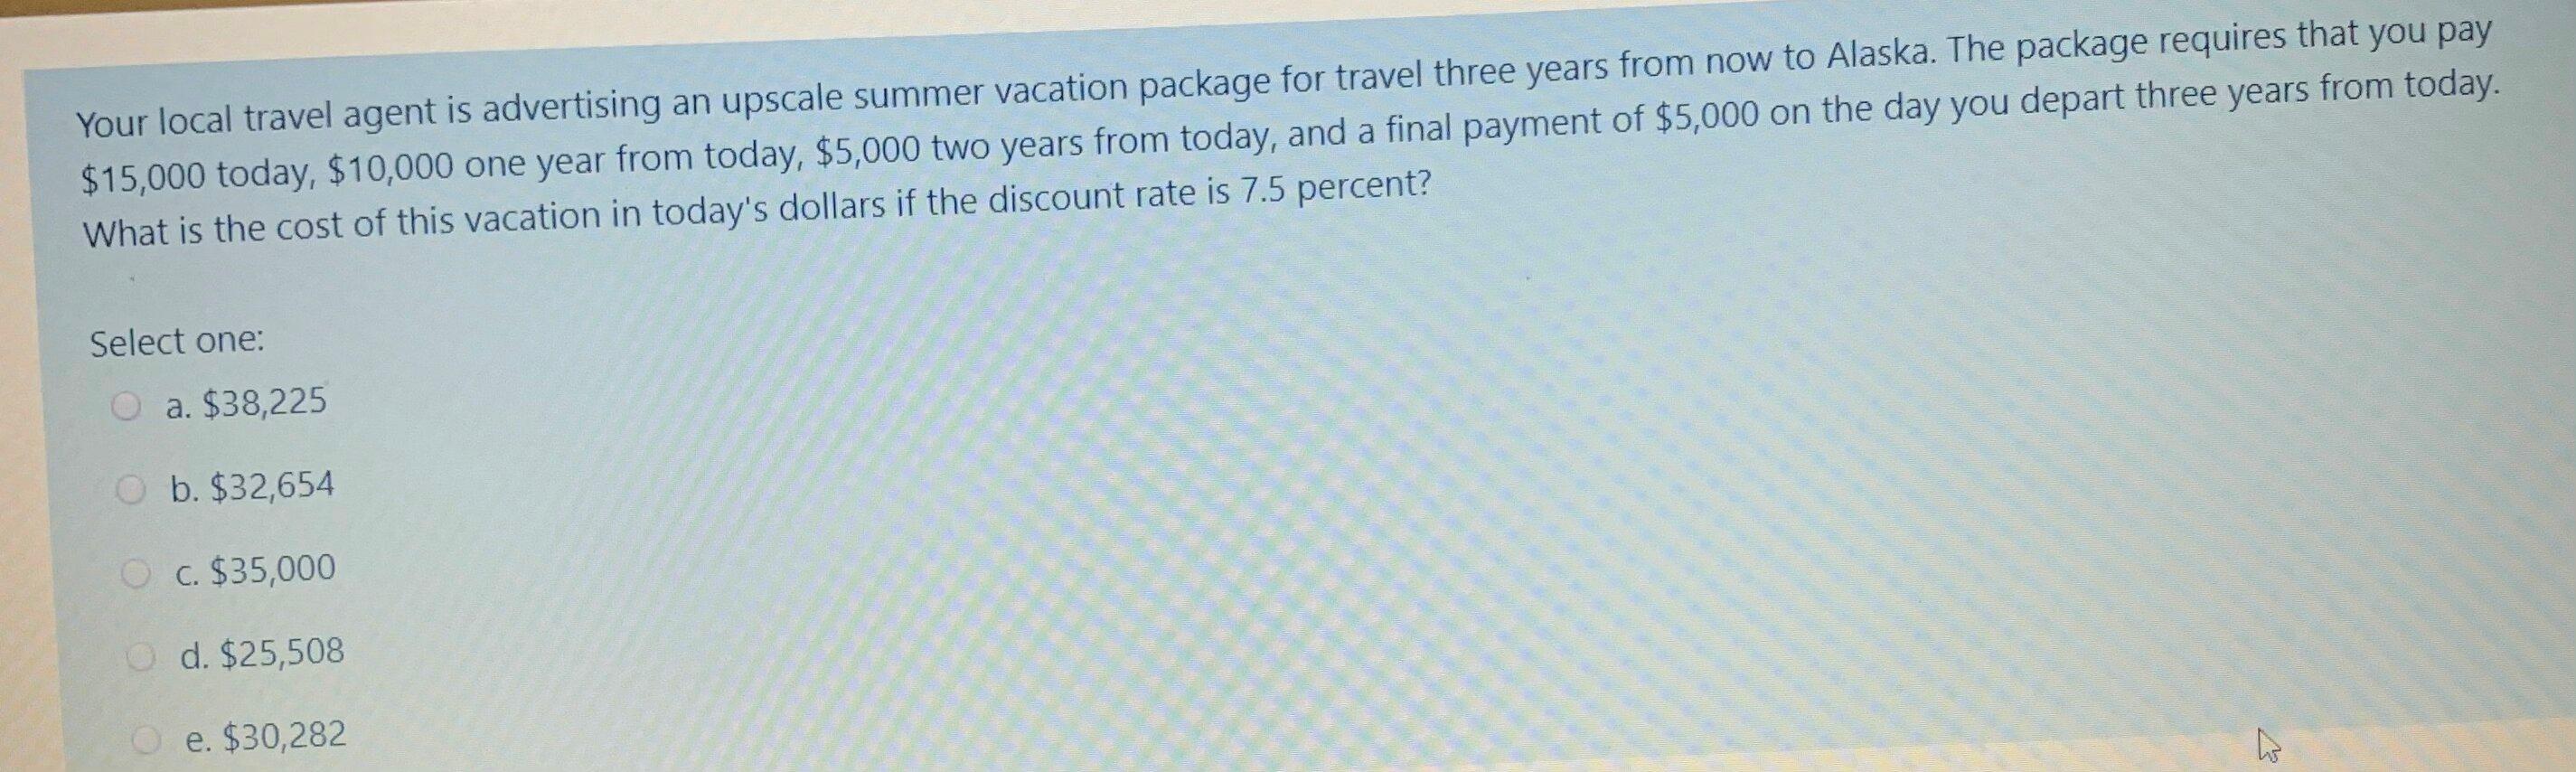 Aa vacation travel agent